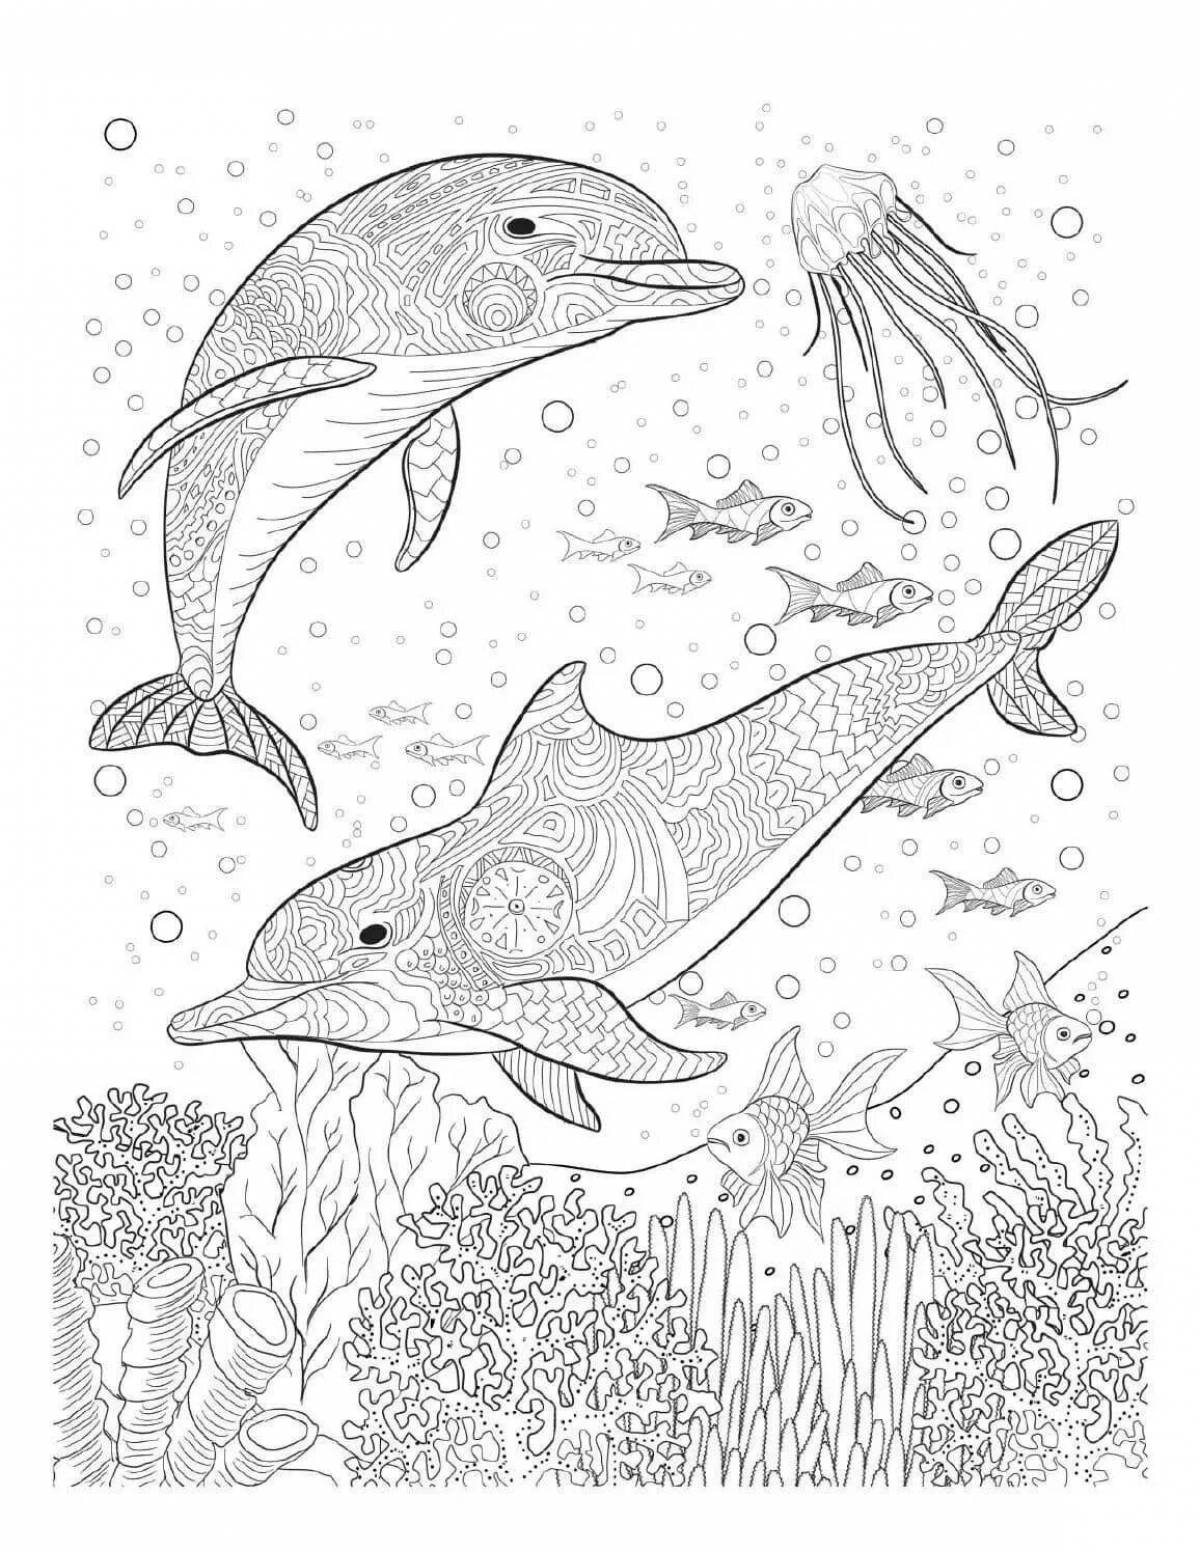 Refreshing anti-stress marine life coloring book